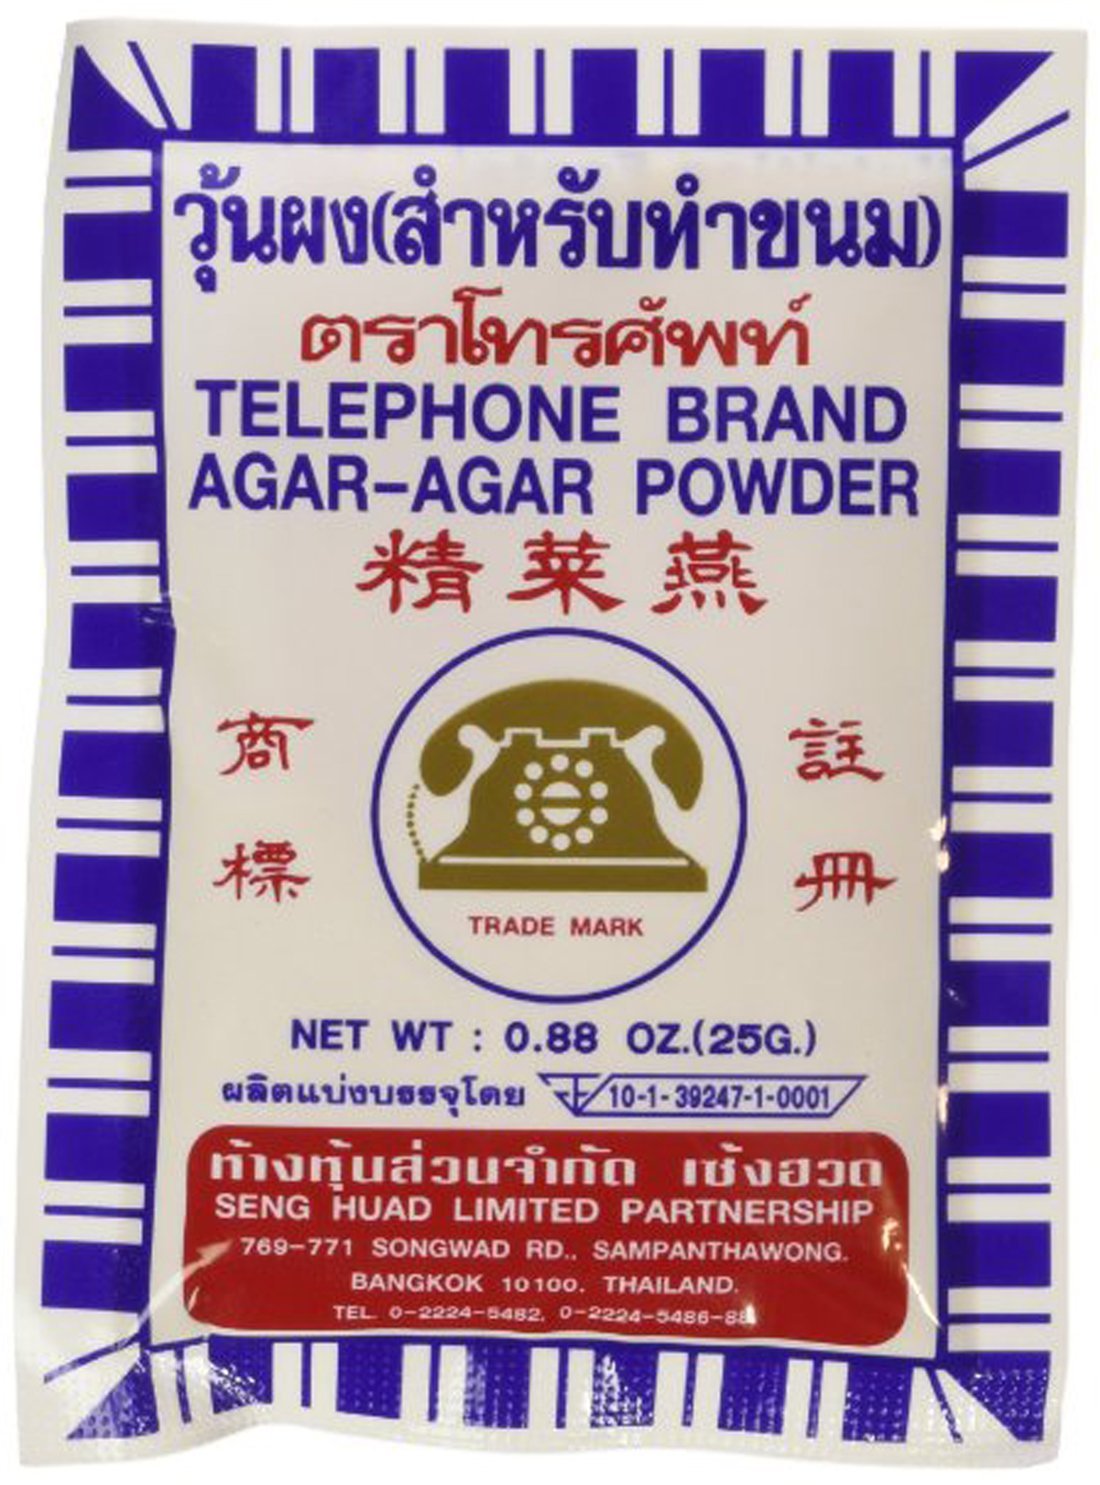 You are currently viewing Agar-Agar Powder (Telephone/Thailand Agar Powder)